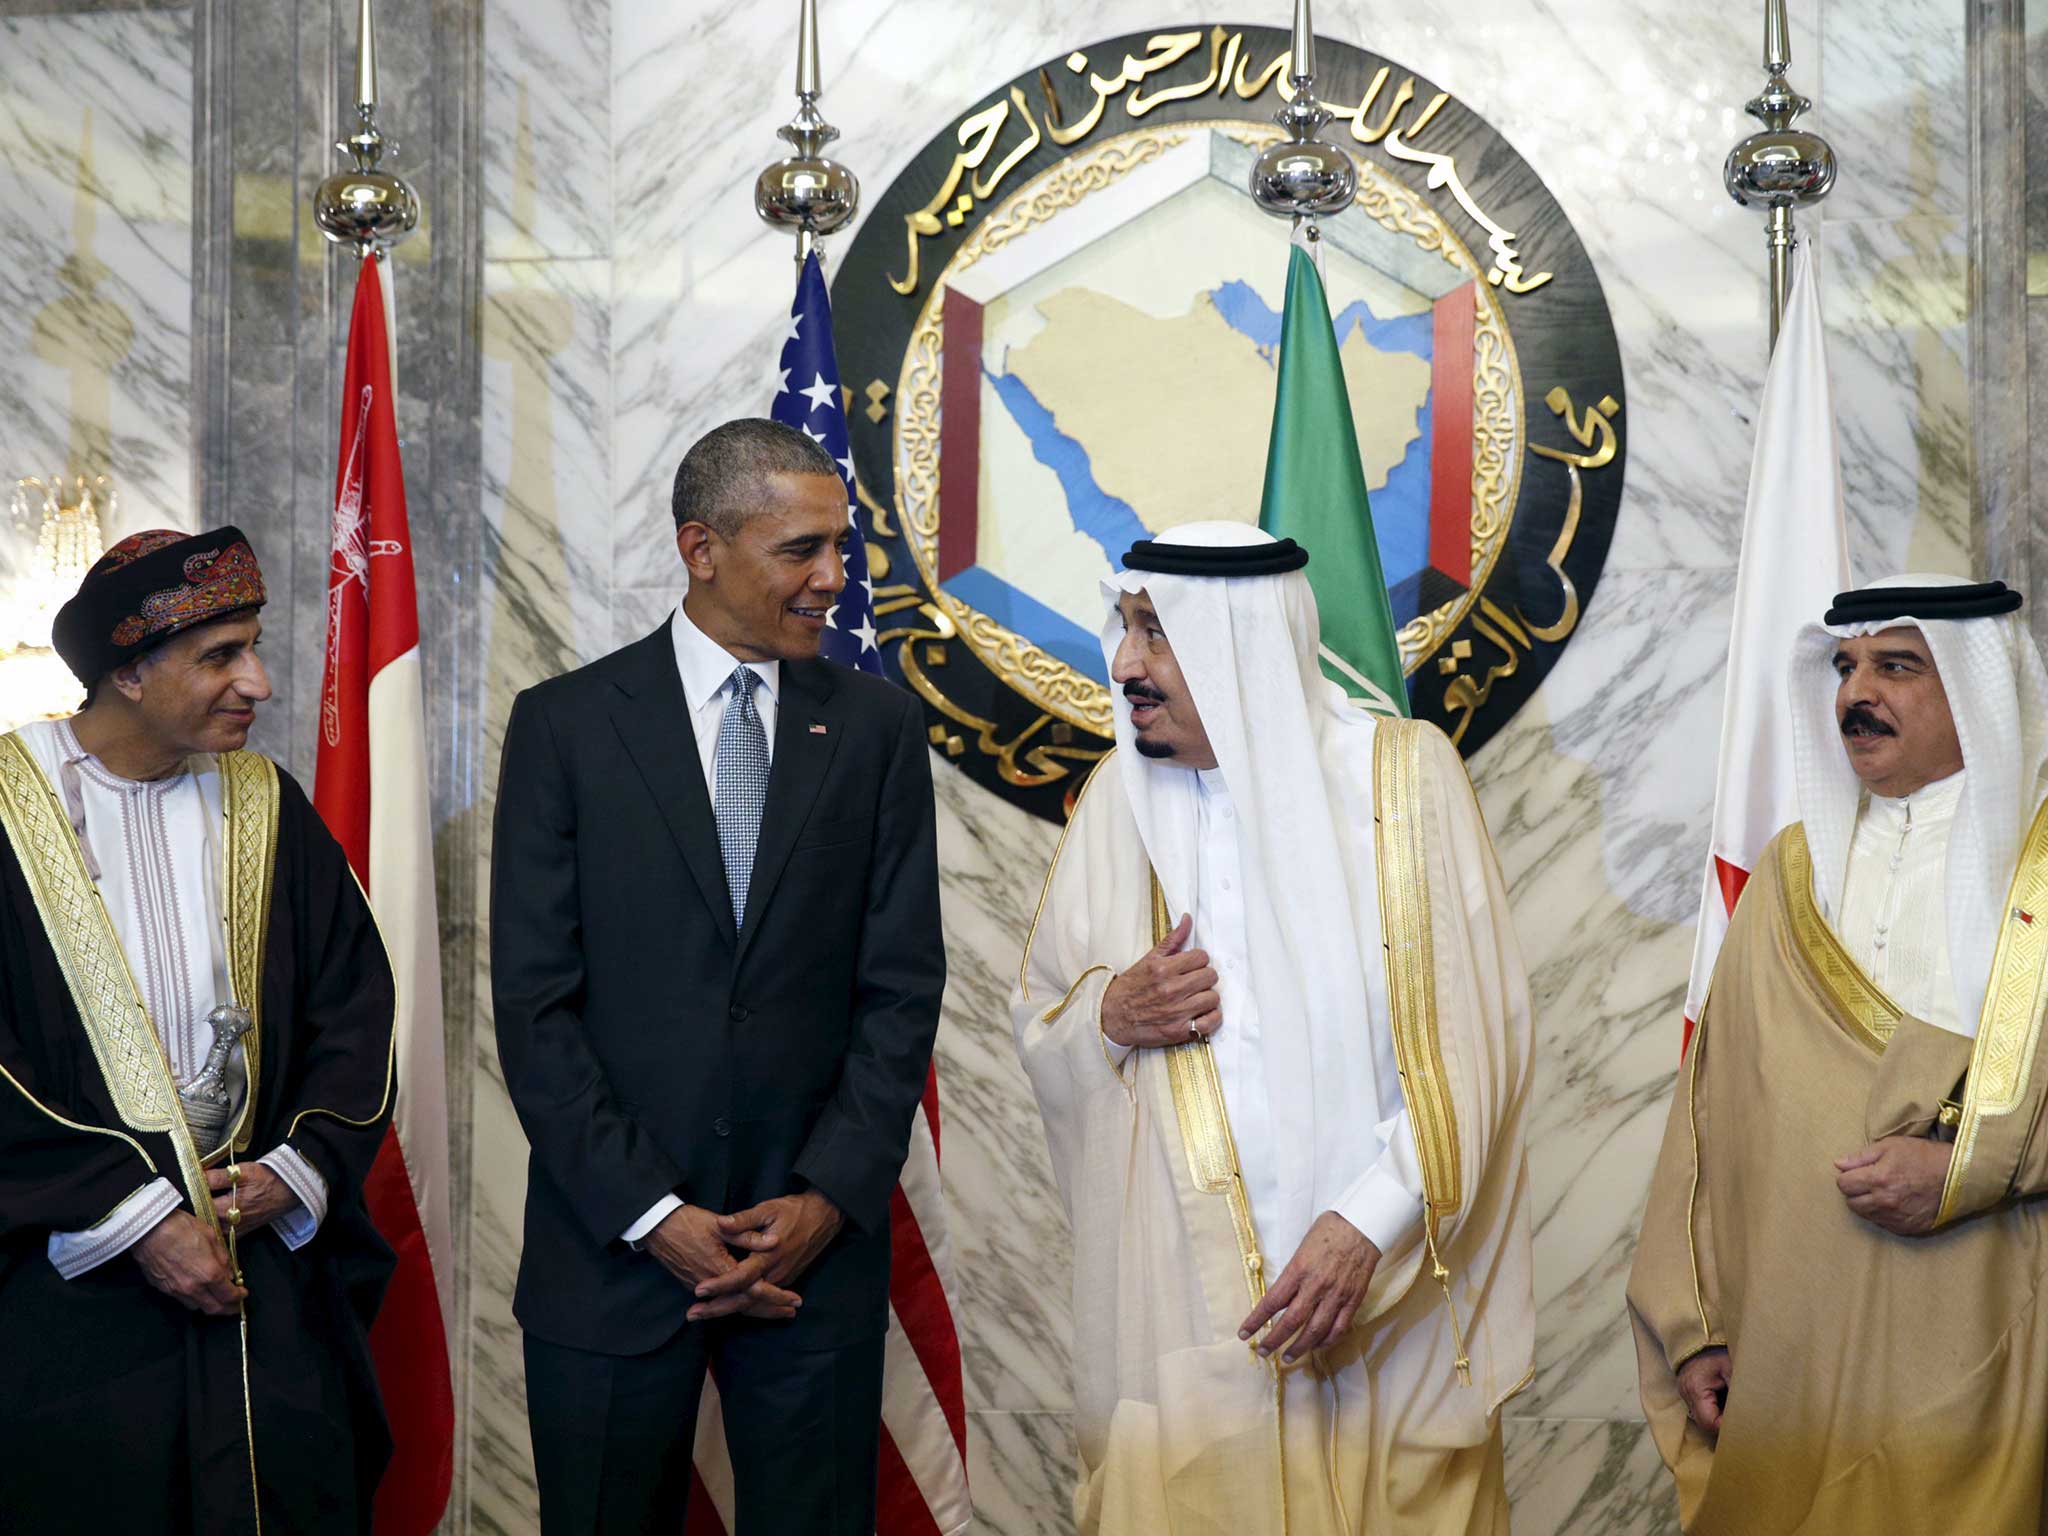 President Obama speaks with Oman's Deputy Prime Minister Sayyid Fahd bin Mahmoud al Said (L), Saudi Arabia's King Salman (2nd R) and Bahrain's King Hamad bin Isa al-Khalifa (R) during the summit of the Gulf Cooperation Council (GCC) in Riyadh